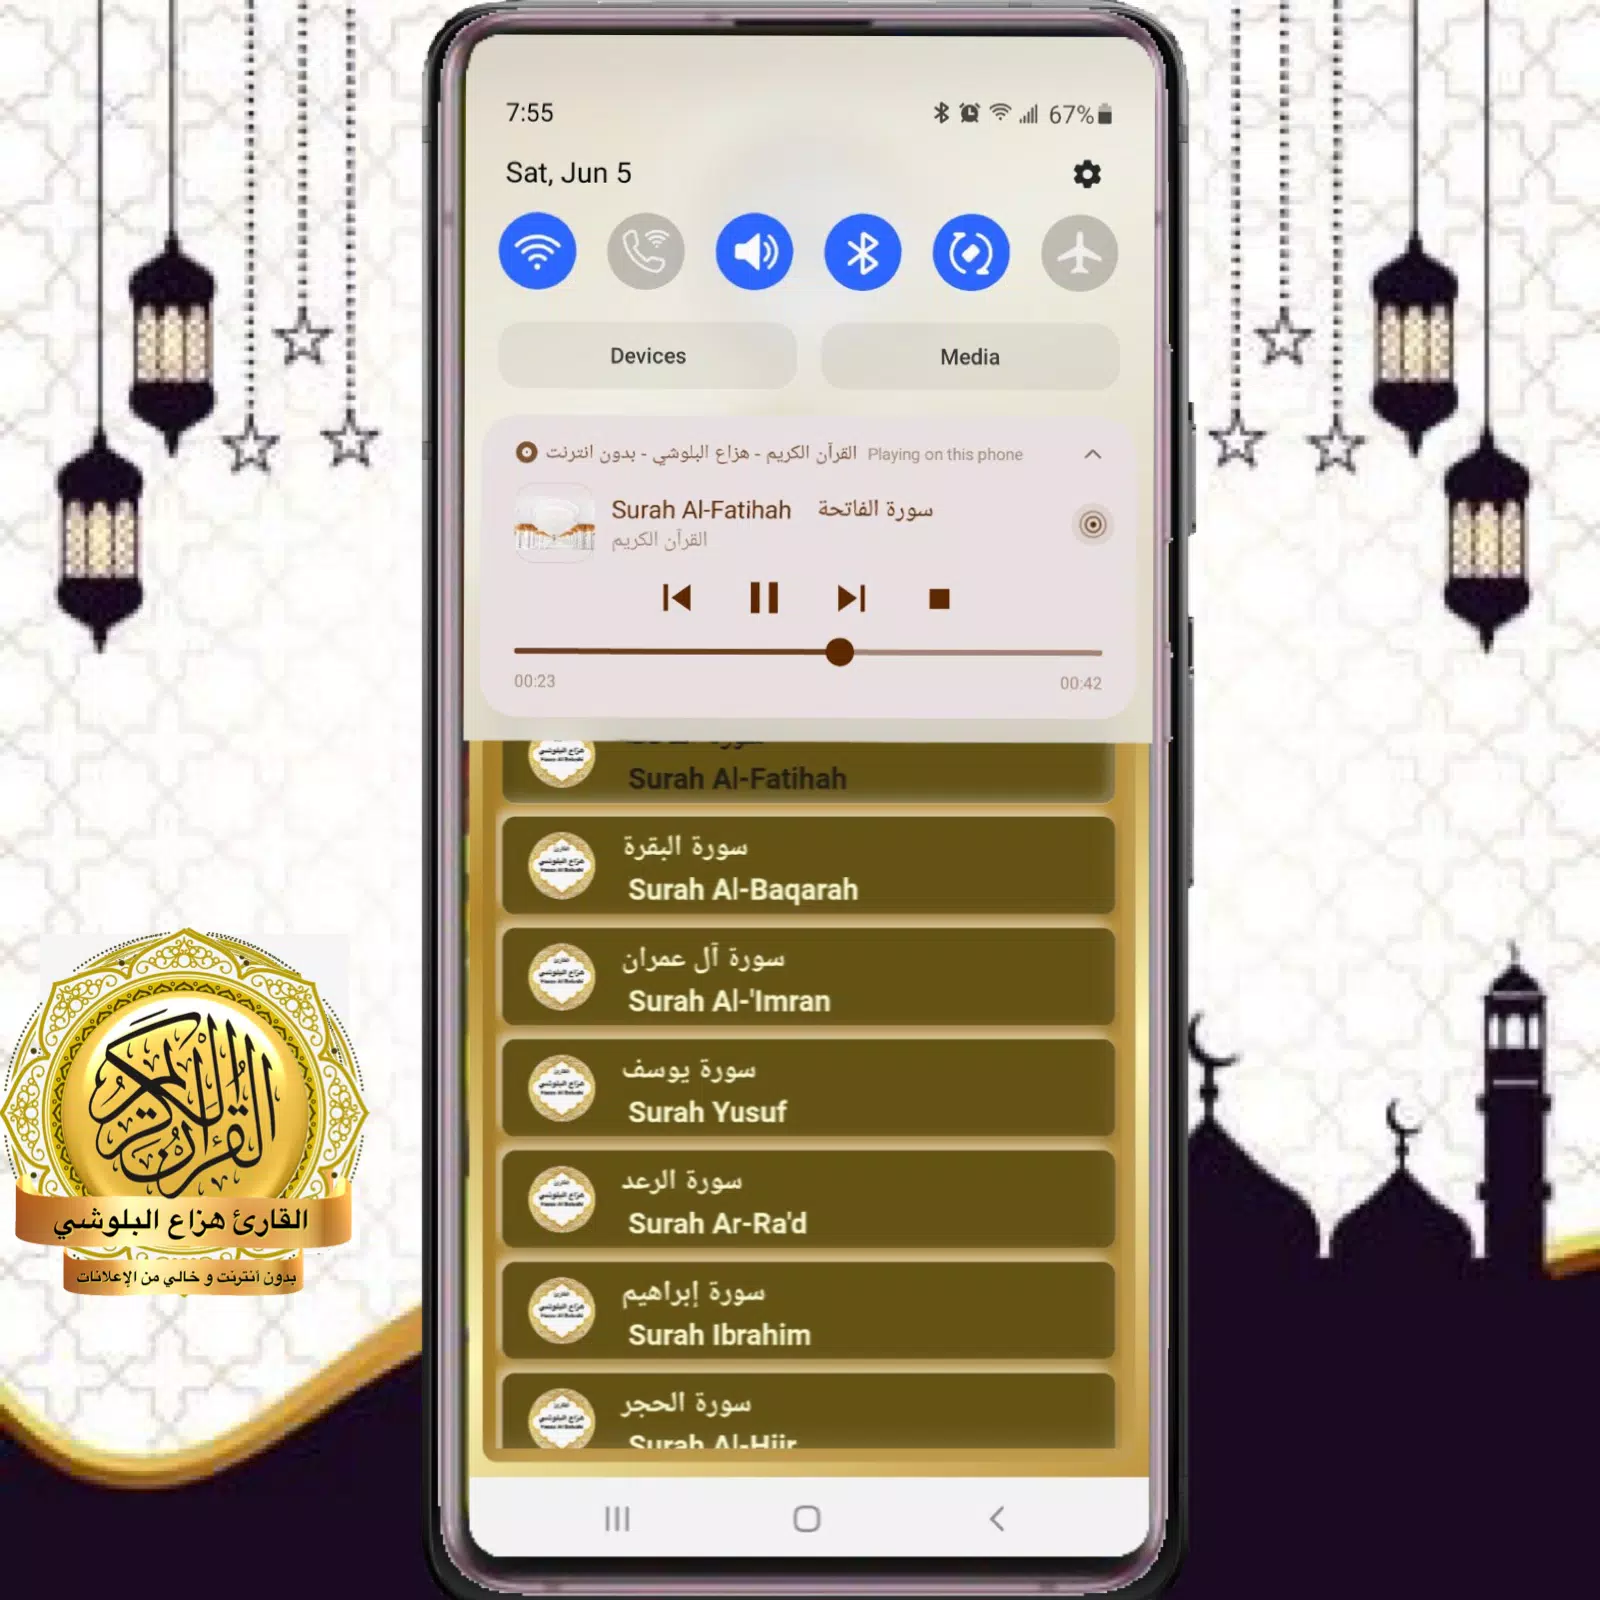 Quran MP3 - Hazza Al Balushi for Android - APK Download